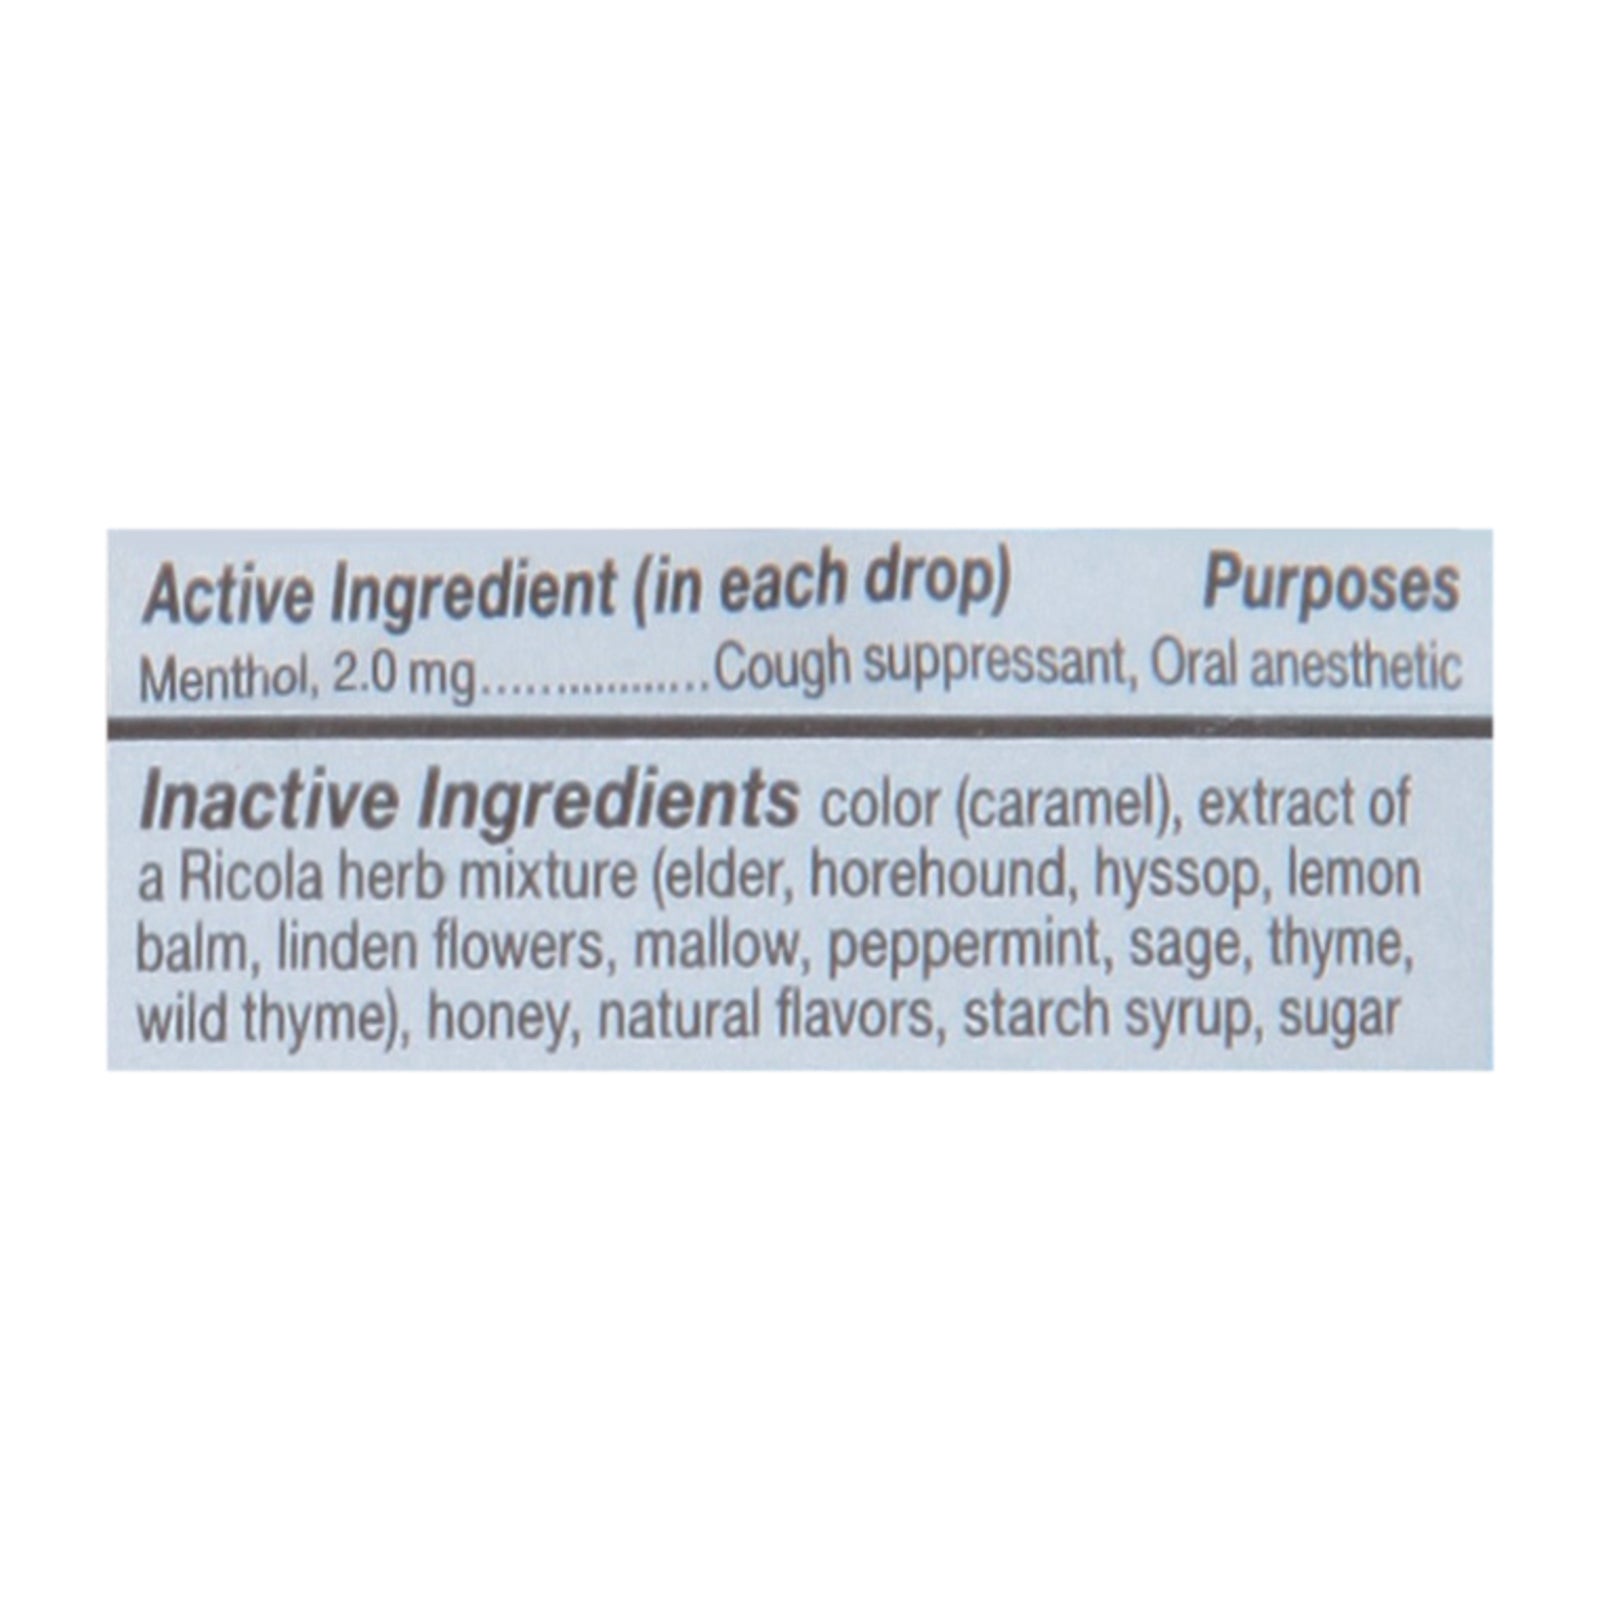 Ricola - Cough Drop Honey Herb - Case Of 8-24 Ct